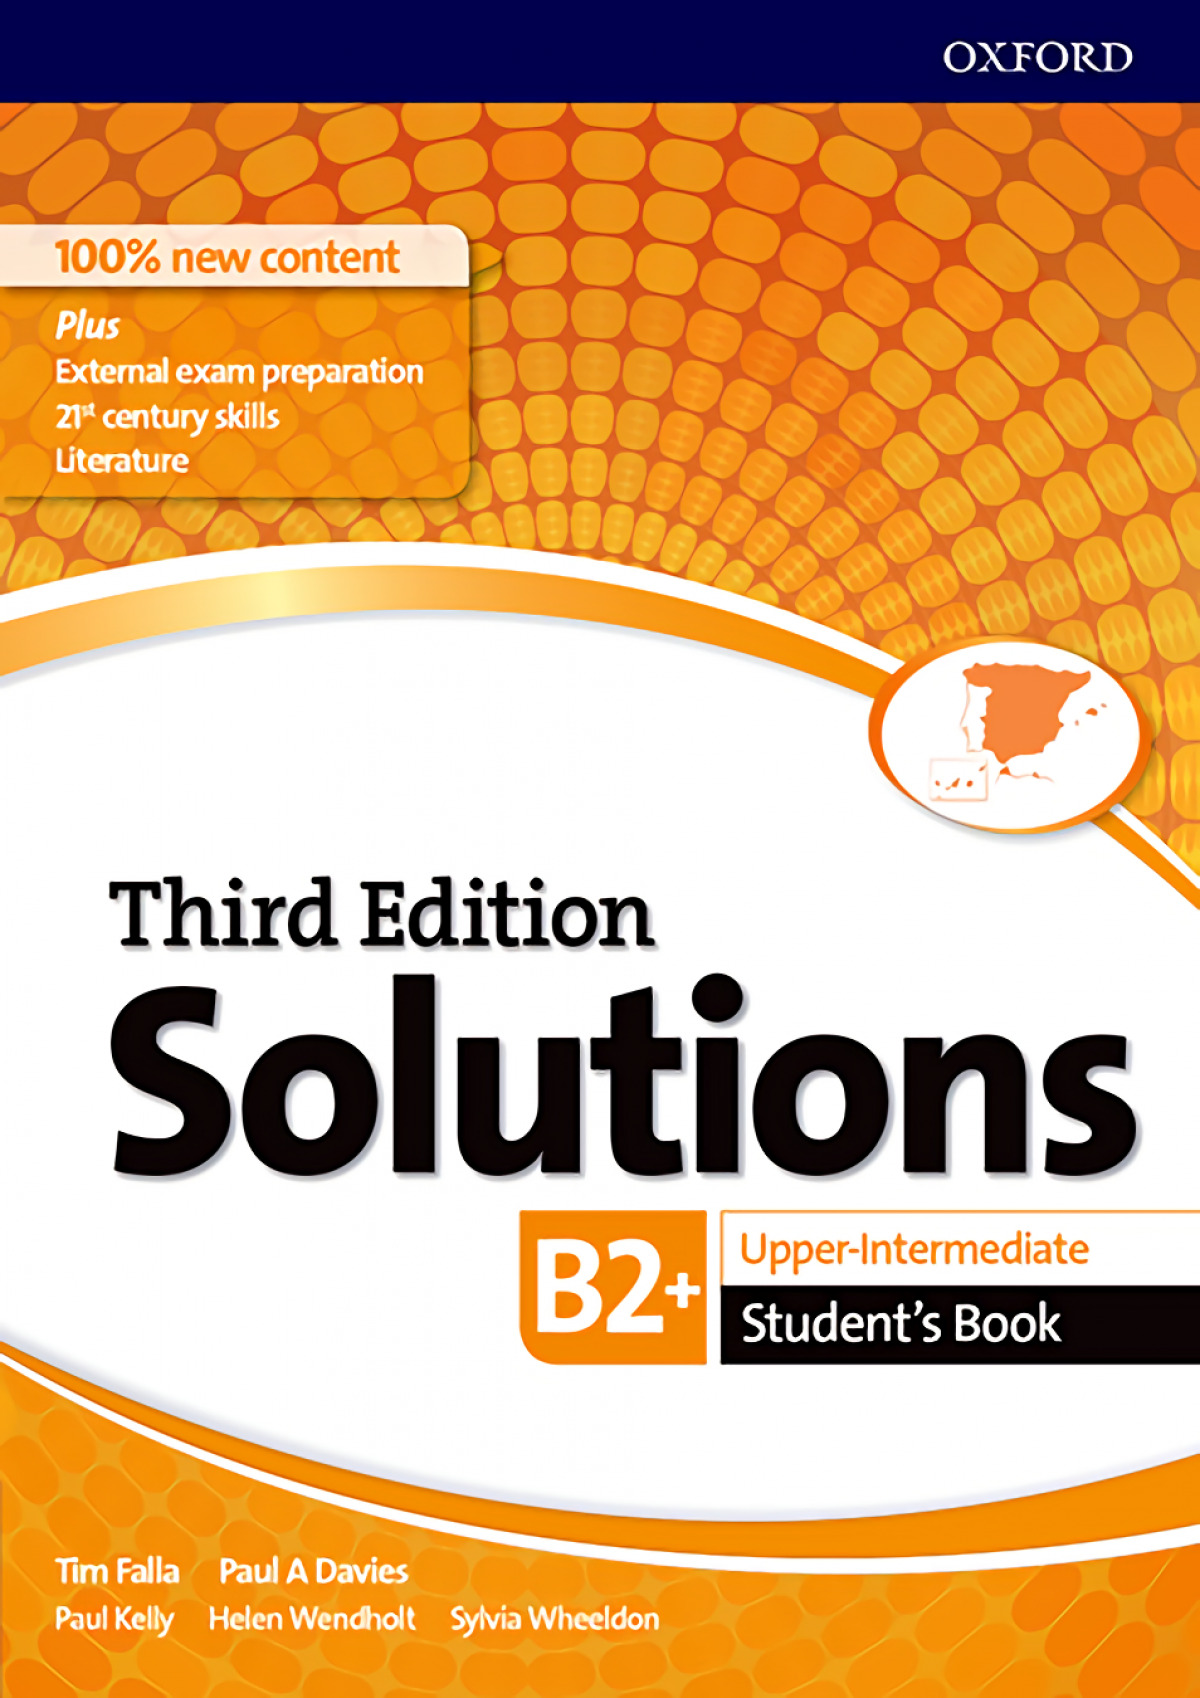 Solutions levels. Солюшенс 2nd Edition Upper Intermediate. Солюшенс 3 издание. Oxford solutions 3rd Edition Upper-Intermediate. Solutions Upper Intermediate 3 издание.